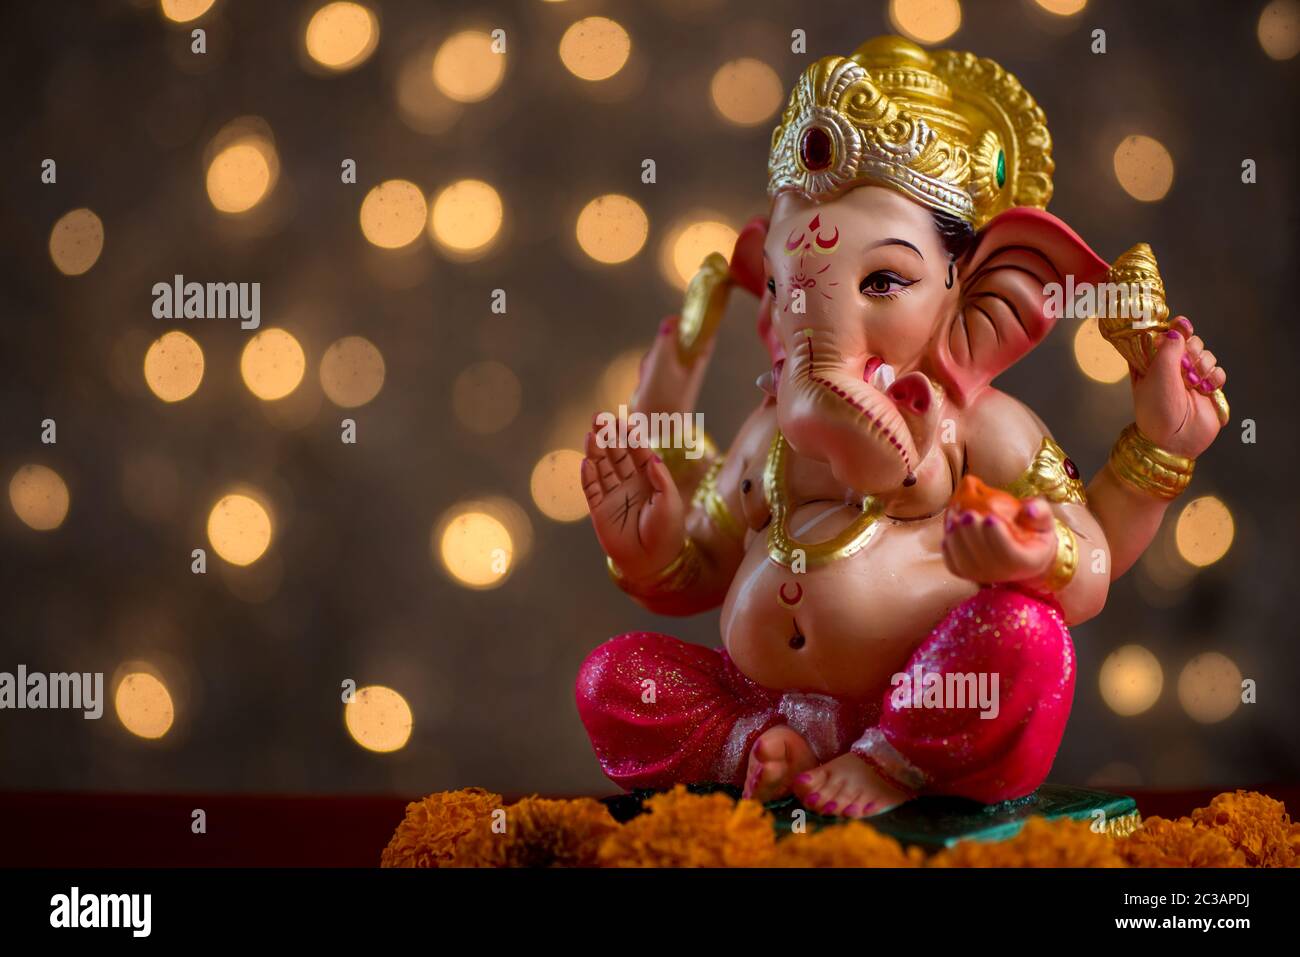 Hindu God Ganesha on Blured bokeh background, Ganesha Idol Stock ...